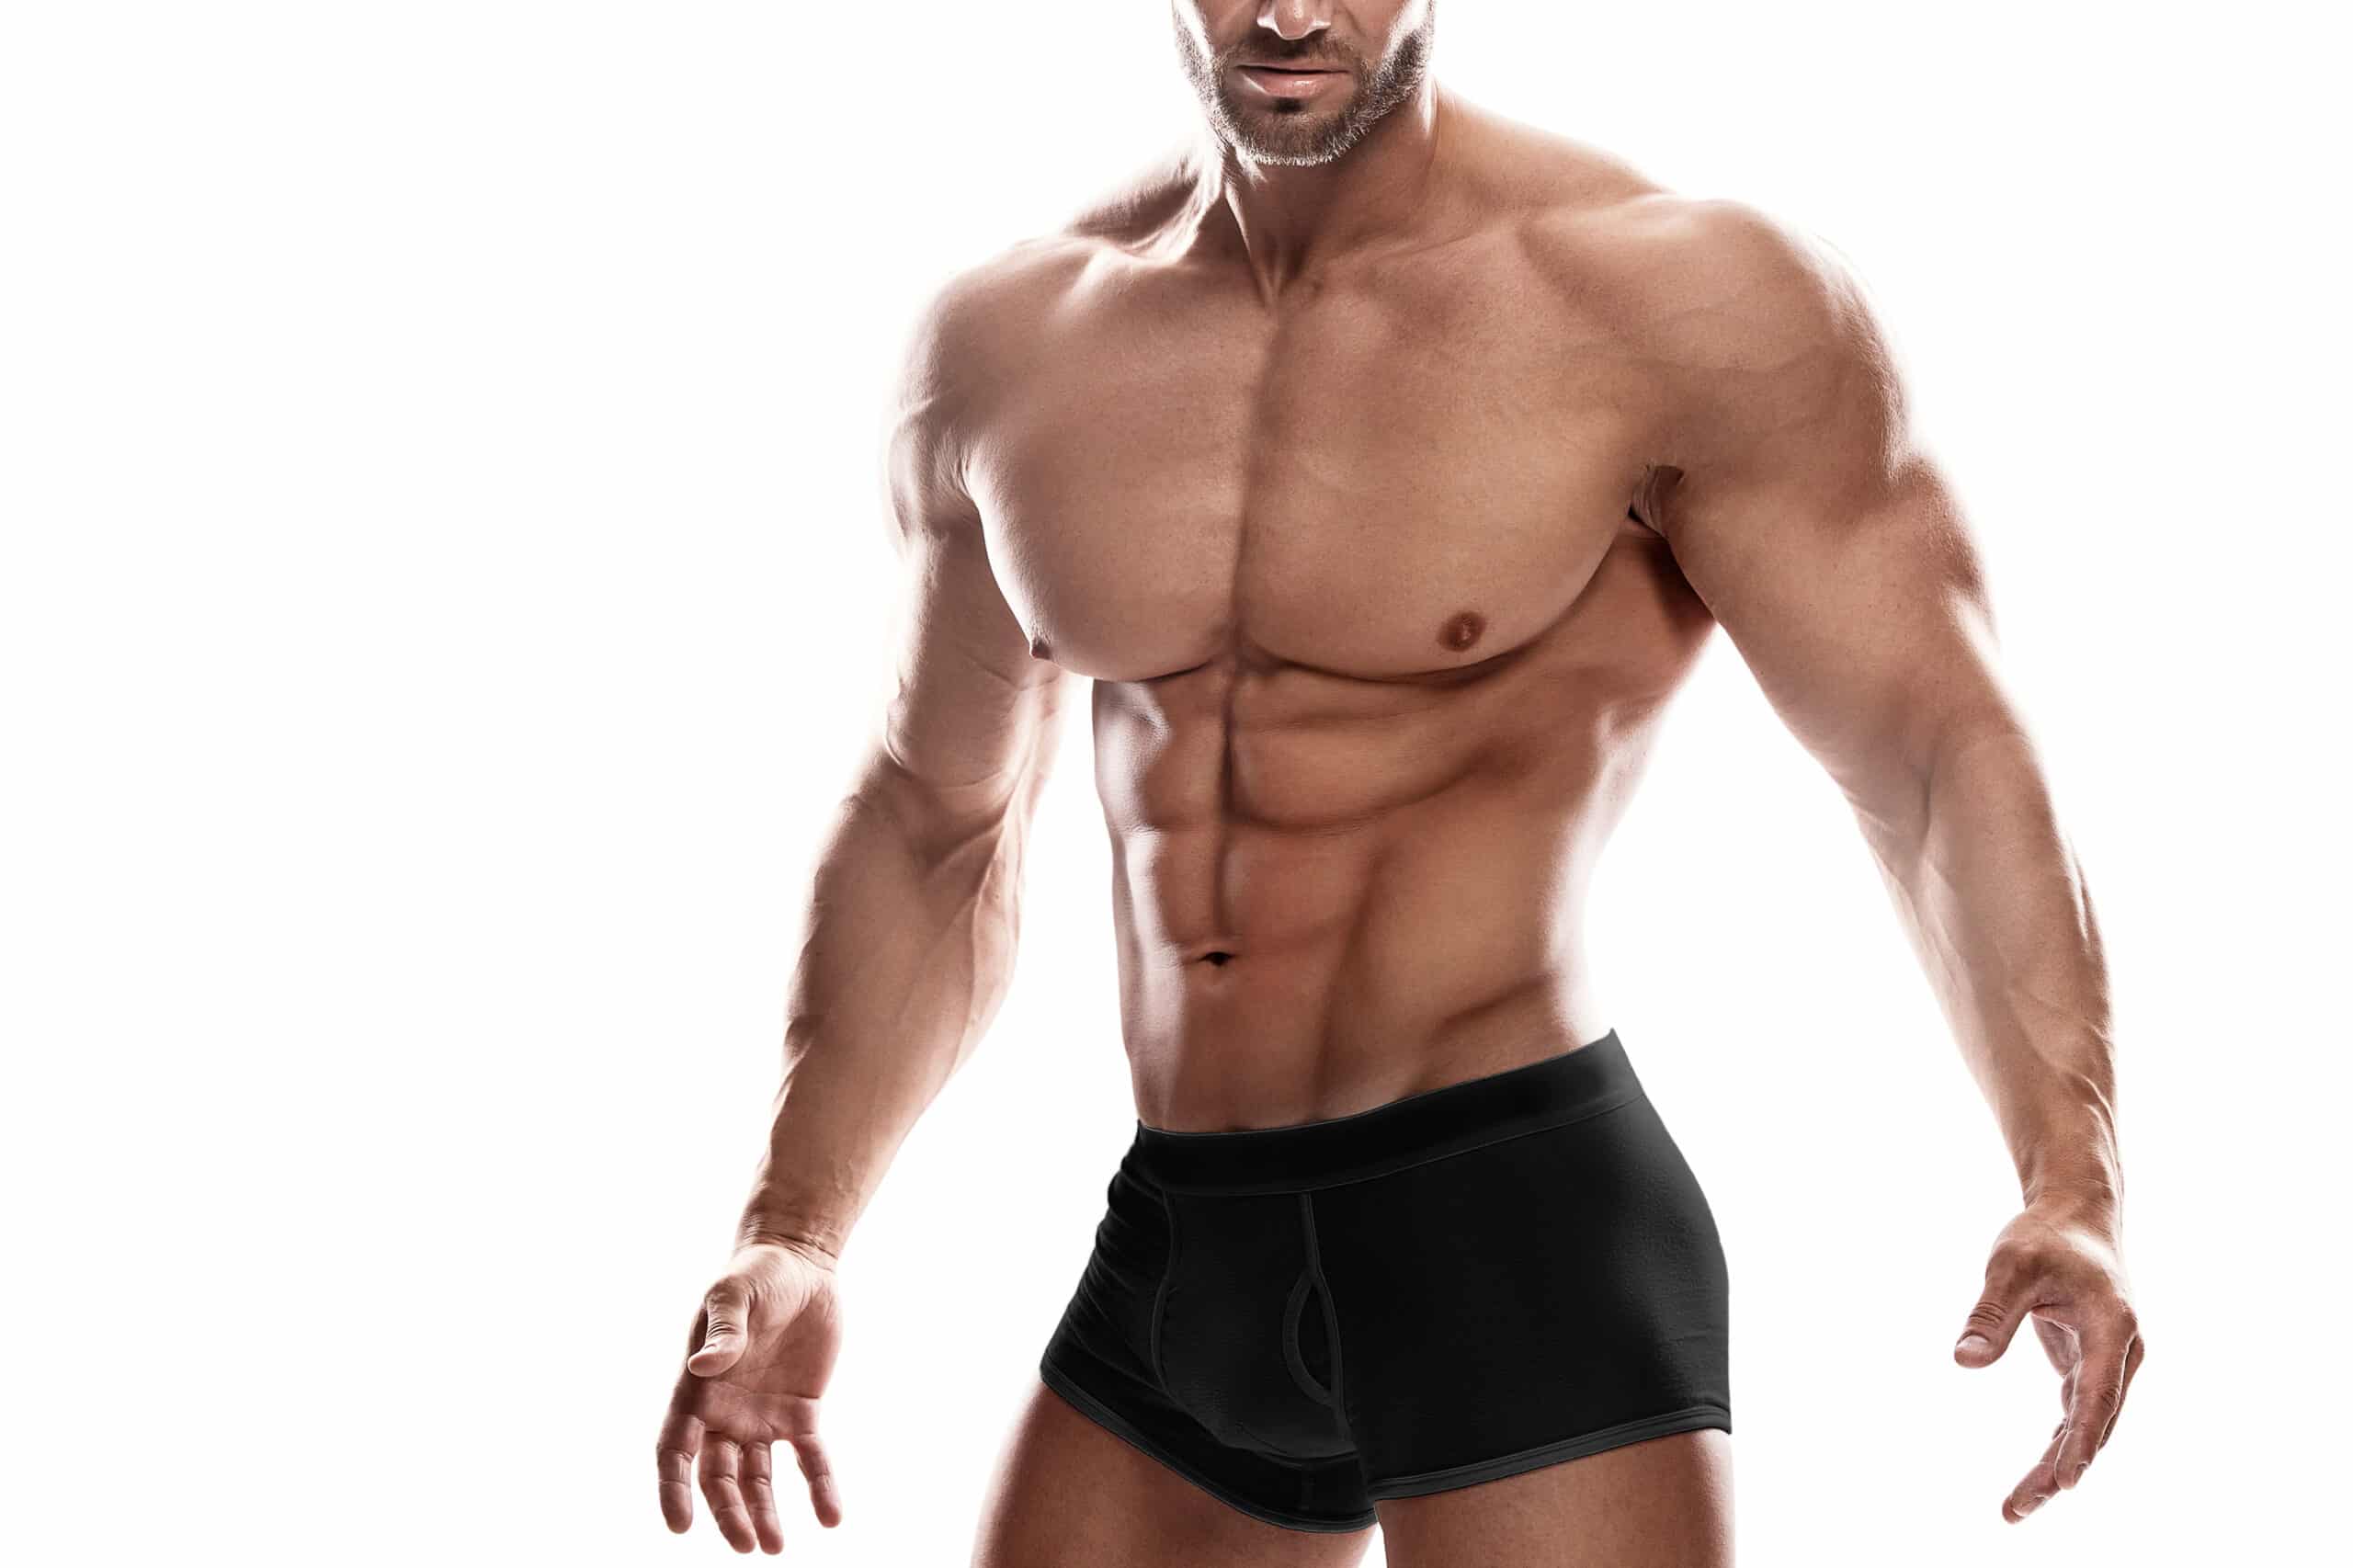 Muscular man wearing black underwear posing against white backgr